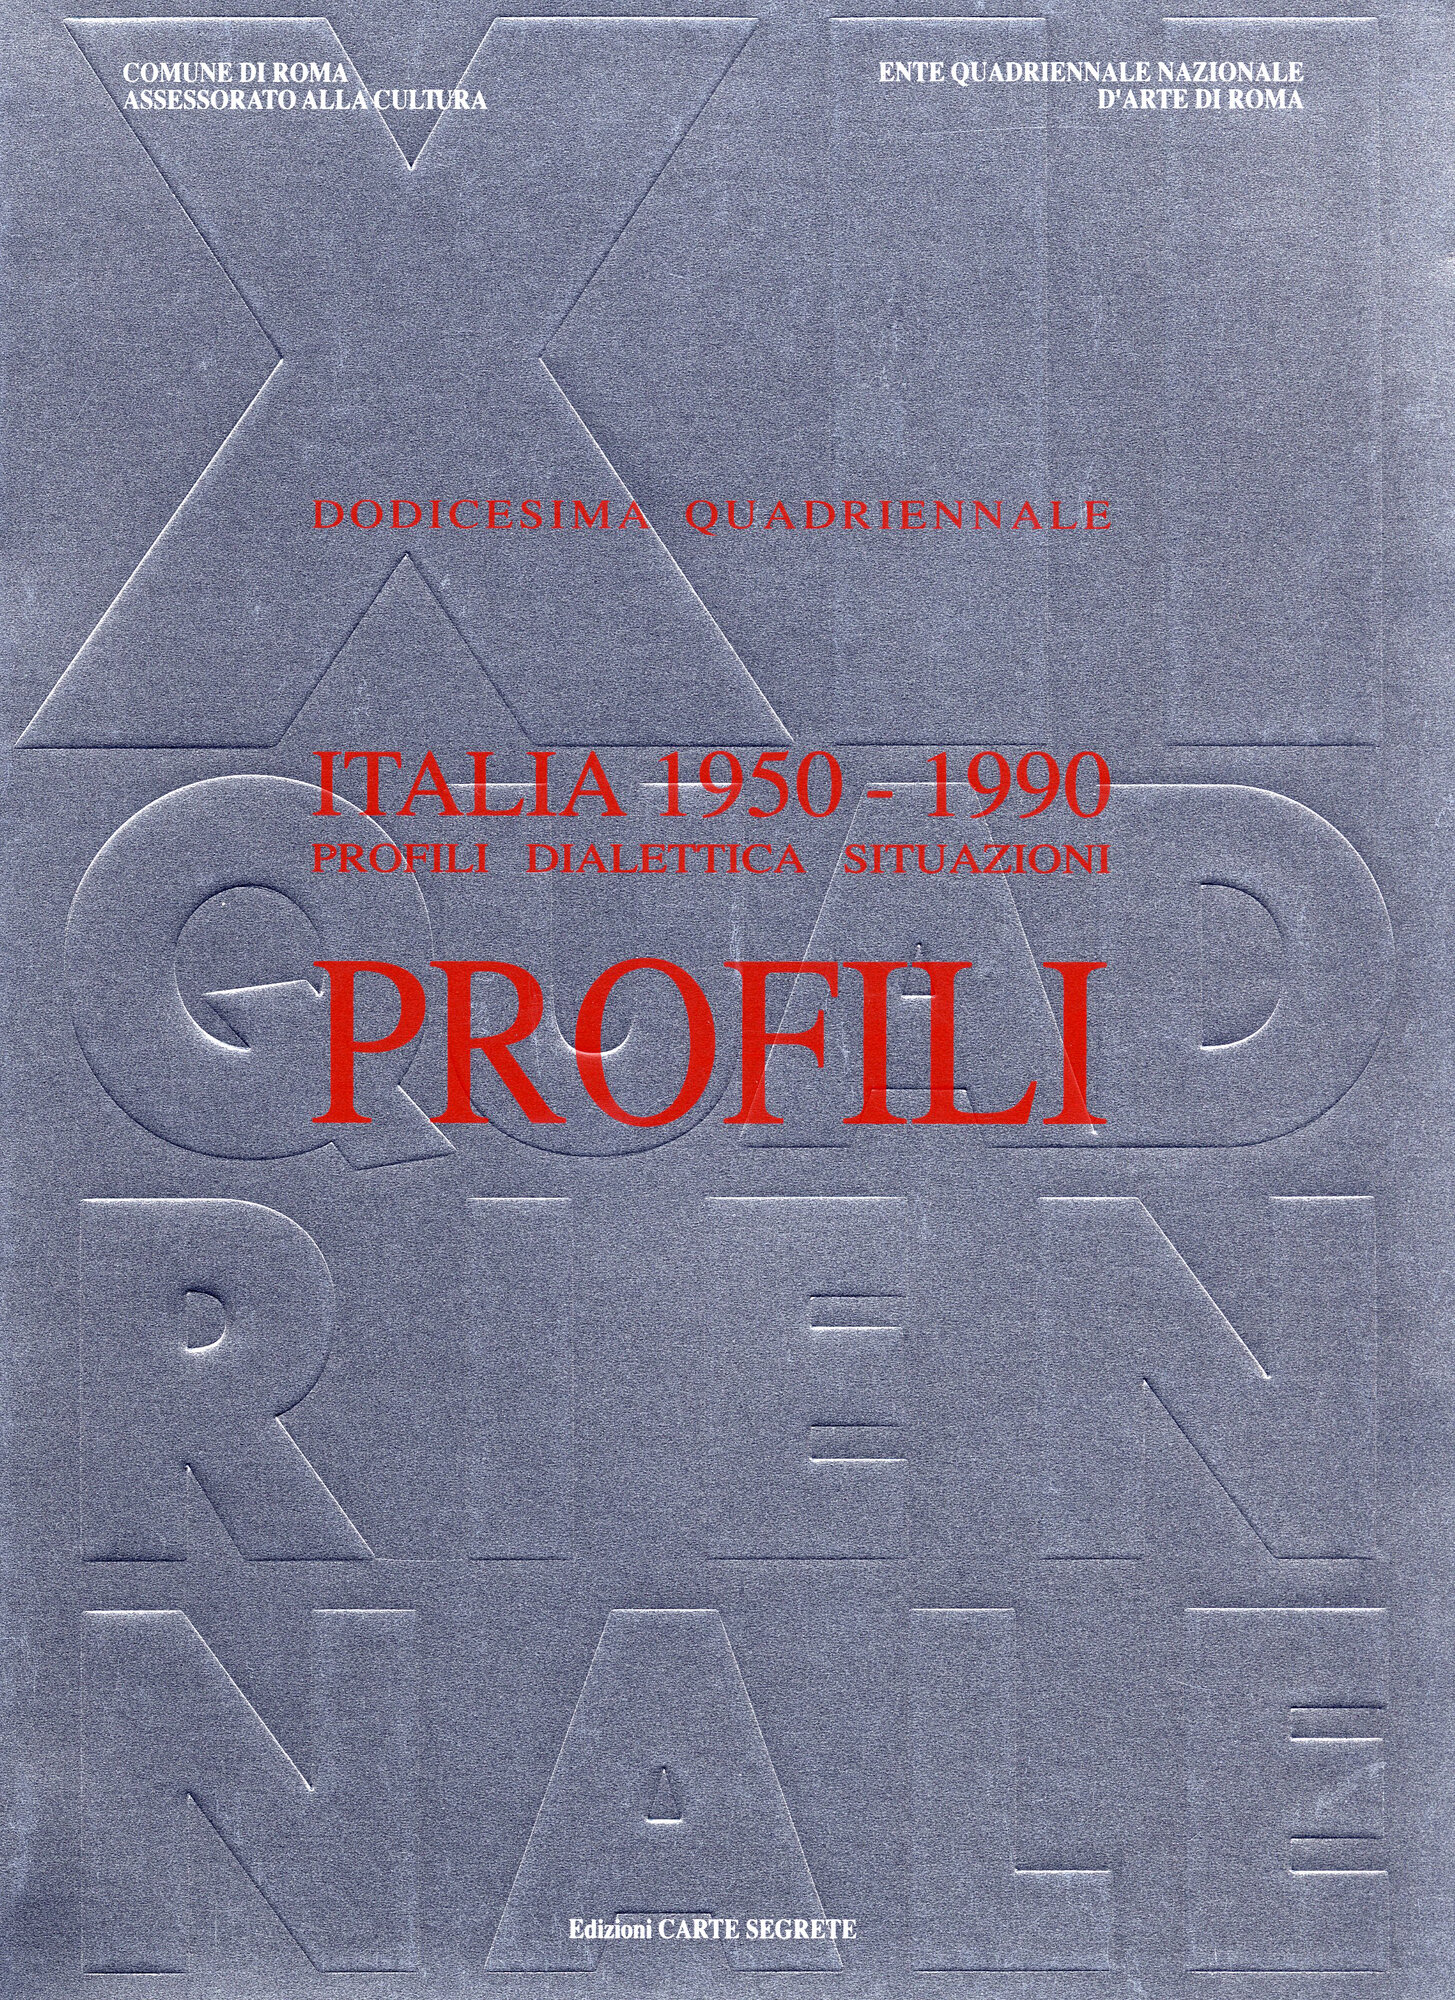 1992_XII Quadriennale Profili.jpg